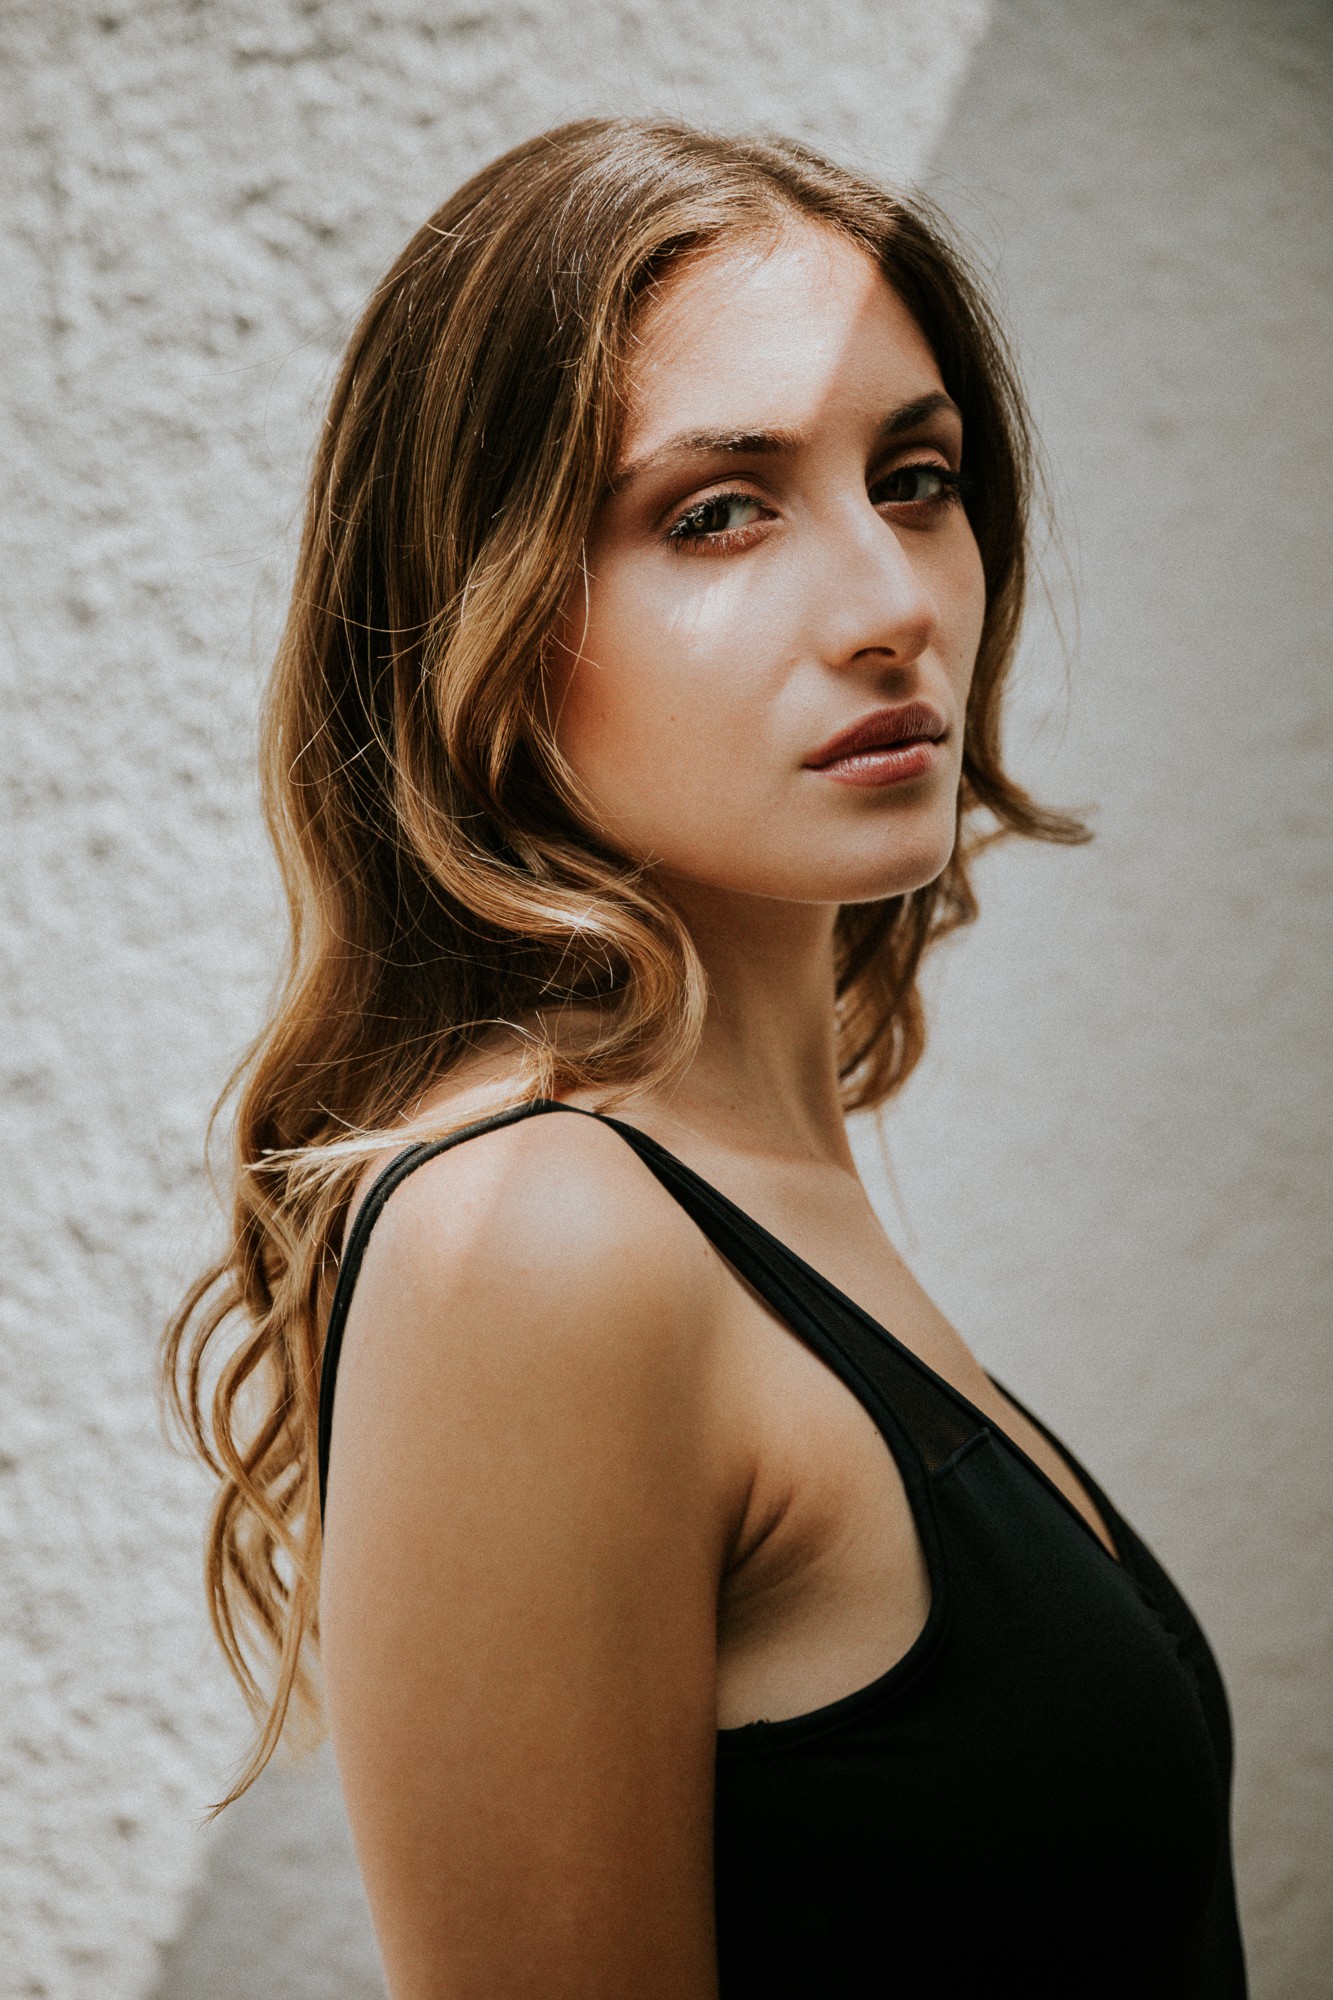 Portrait Nicole - Model Test